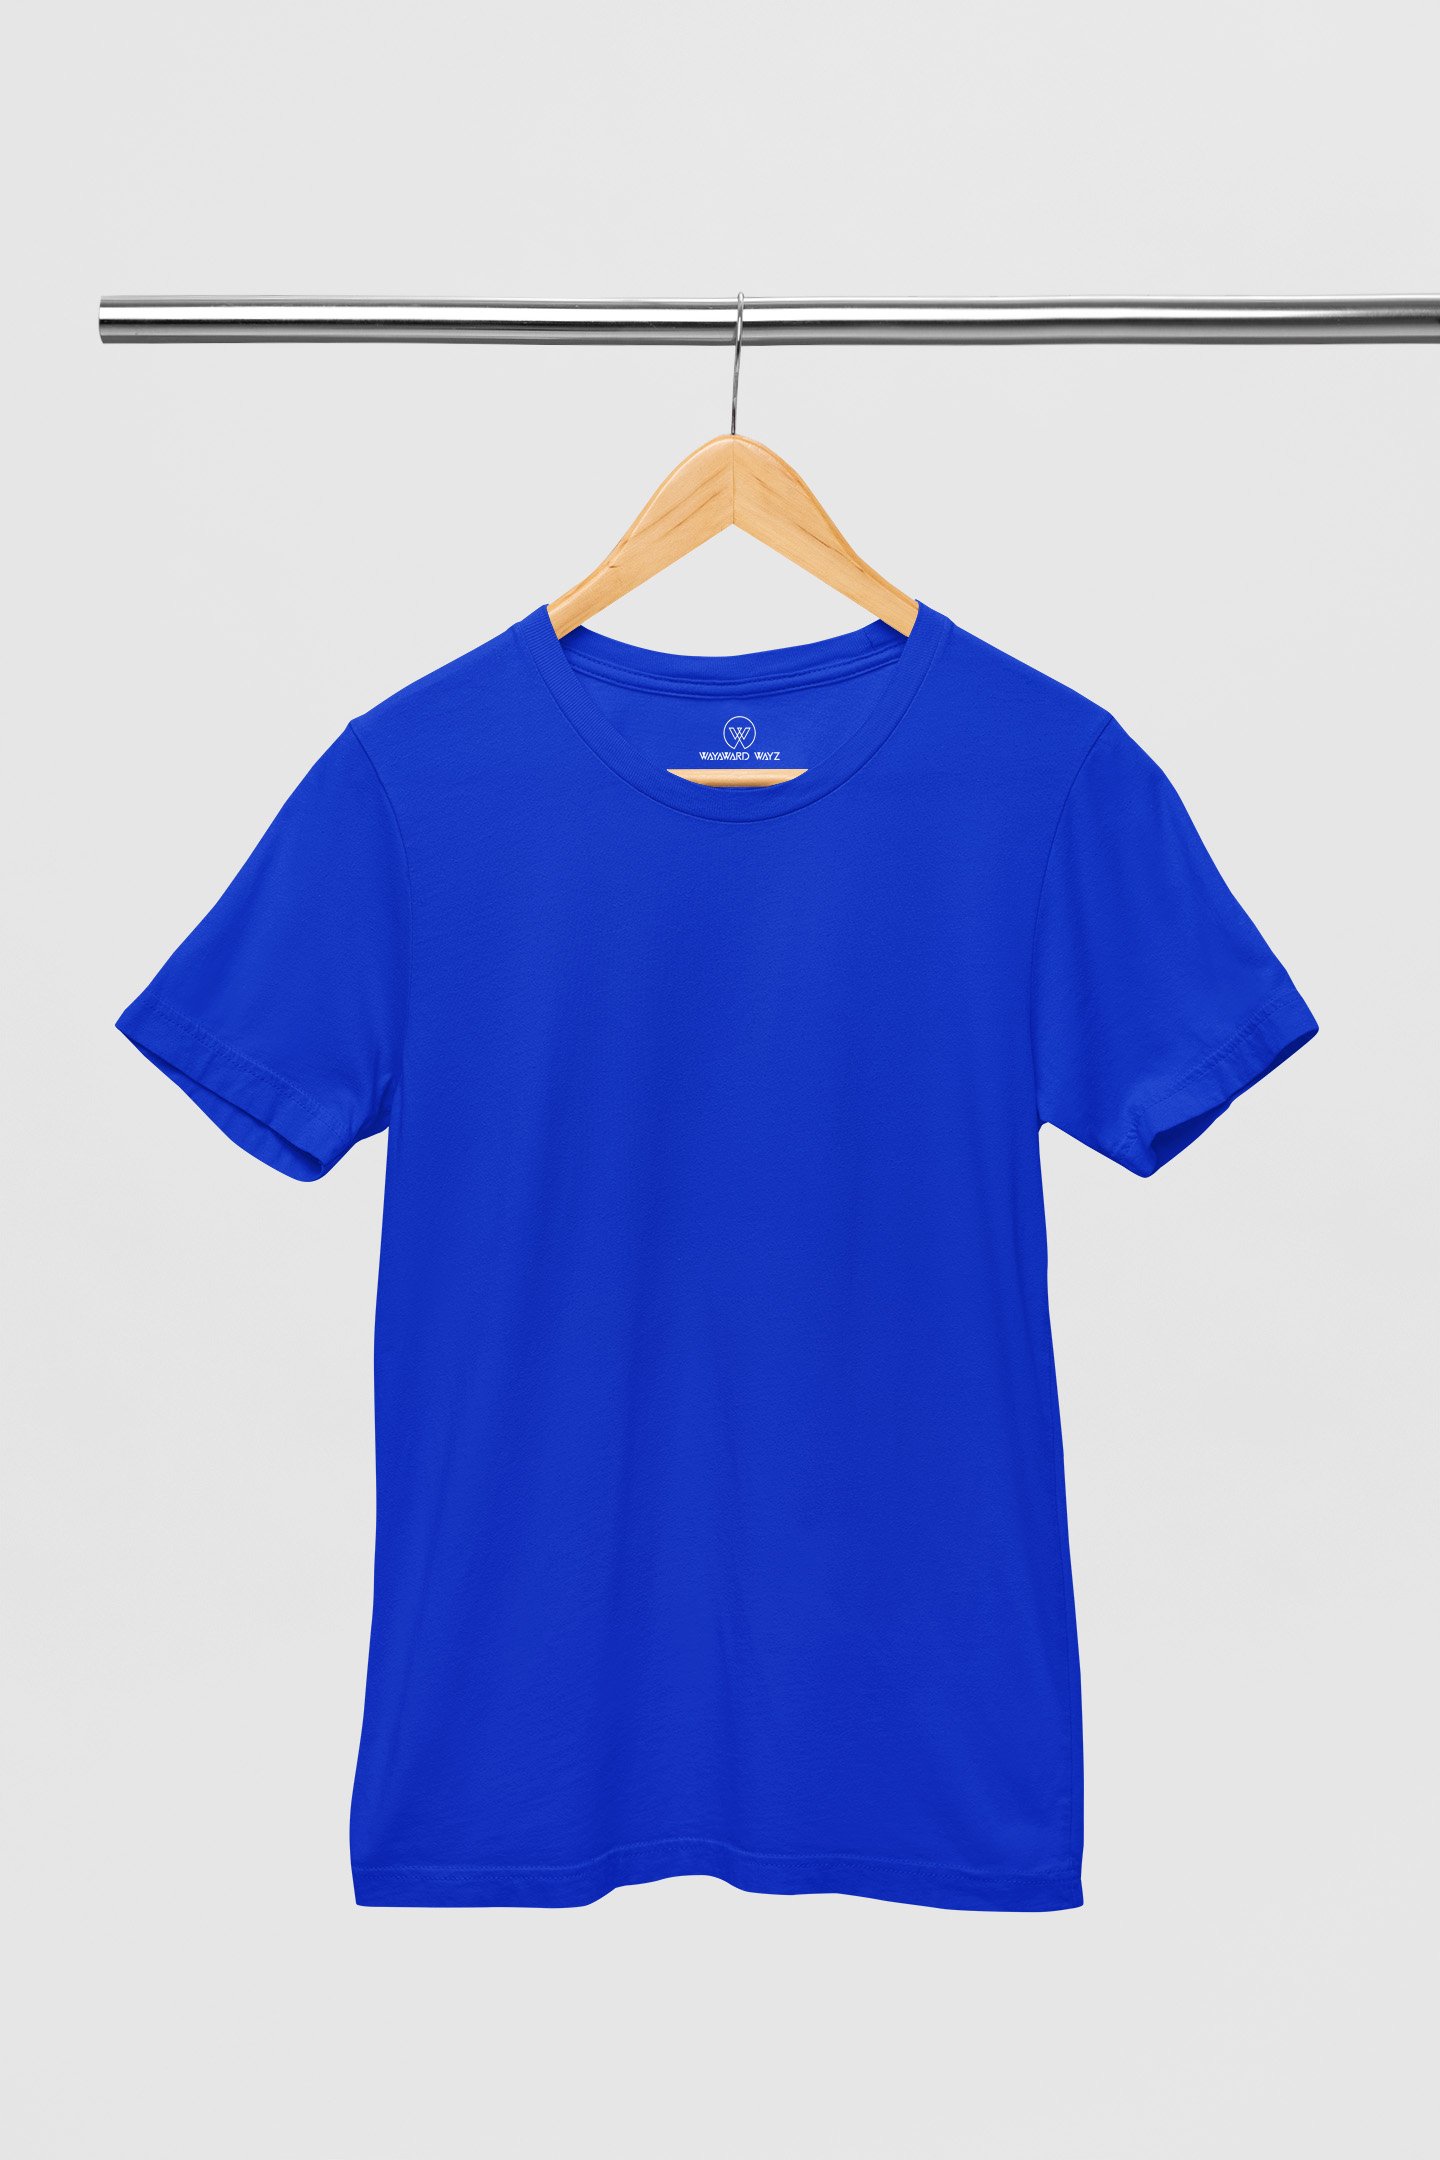 Wayward Wayz Solid T-Shirt Royal Blue-hanger front